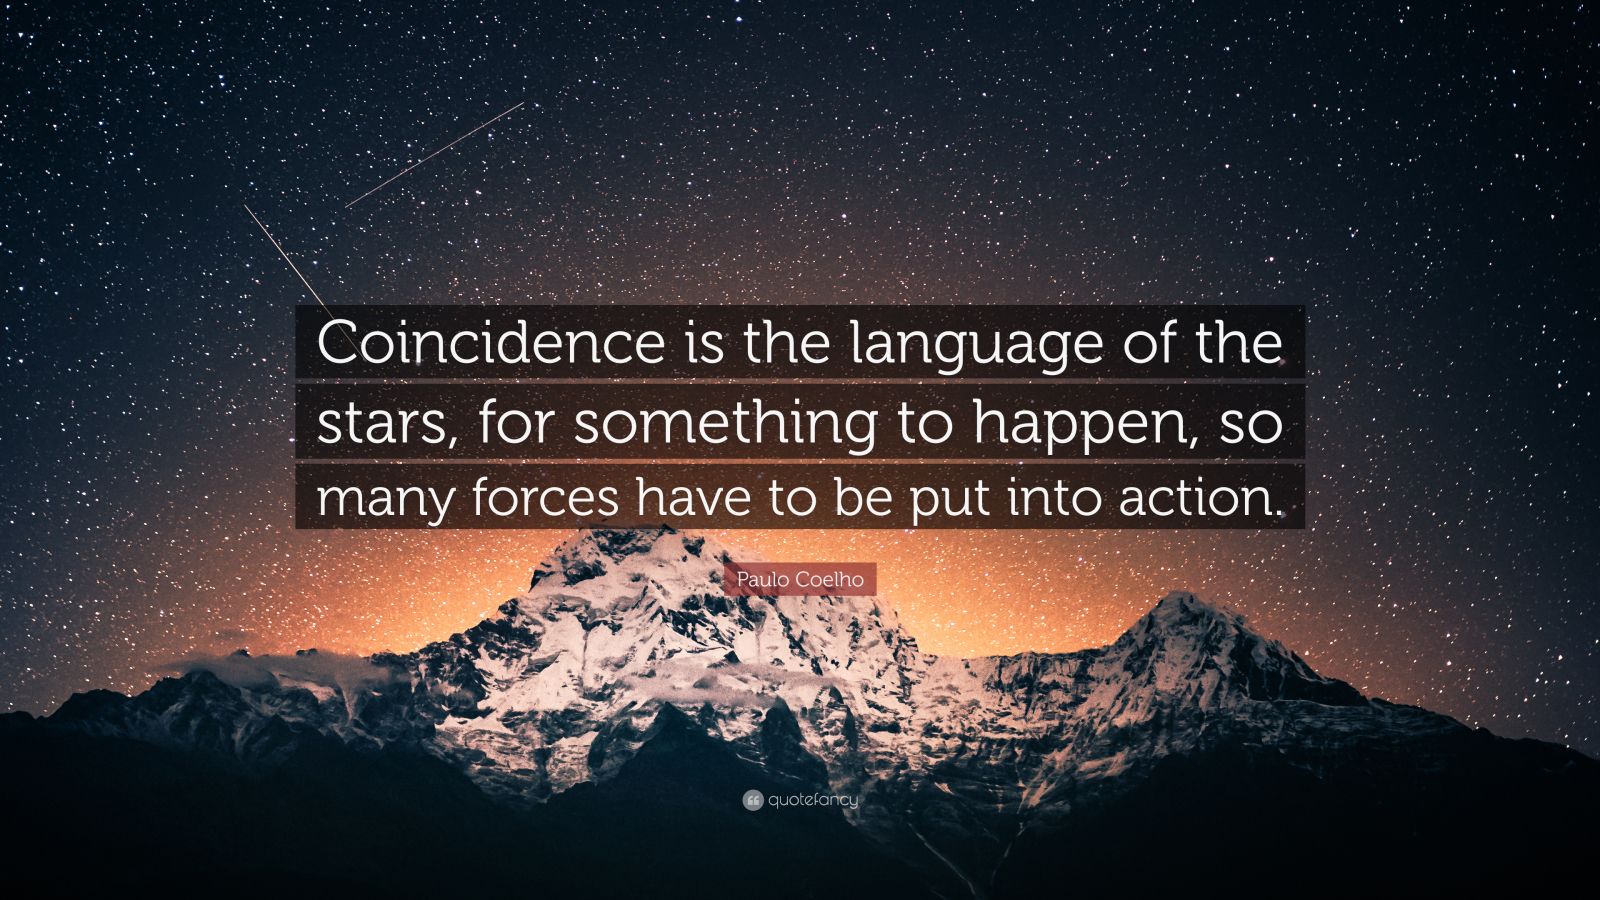 The language of stars